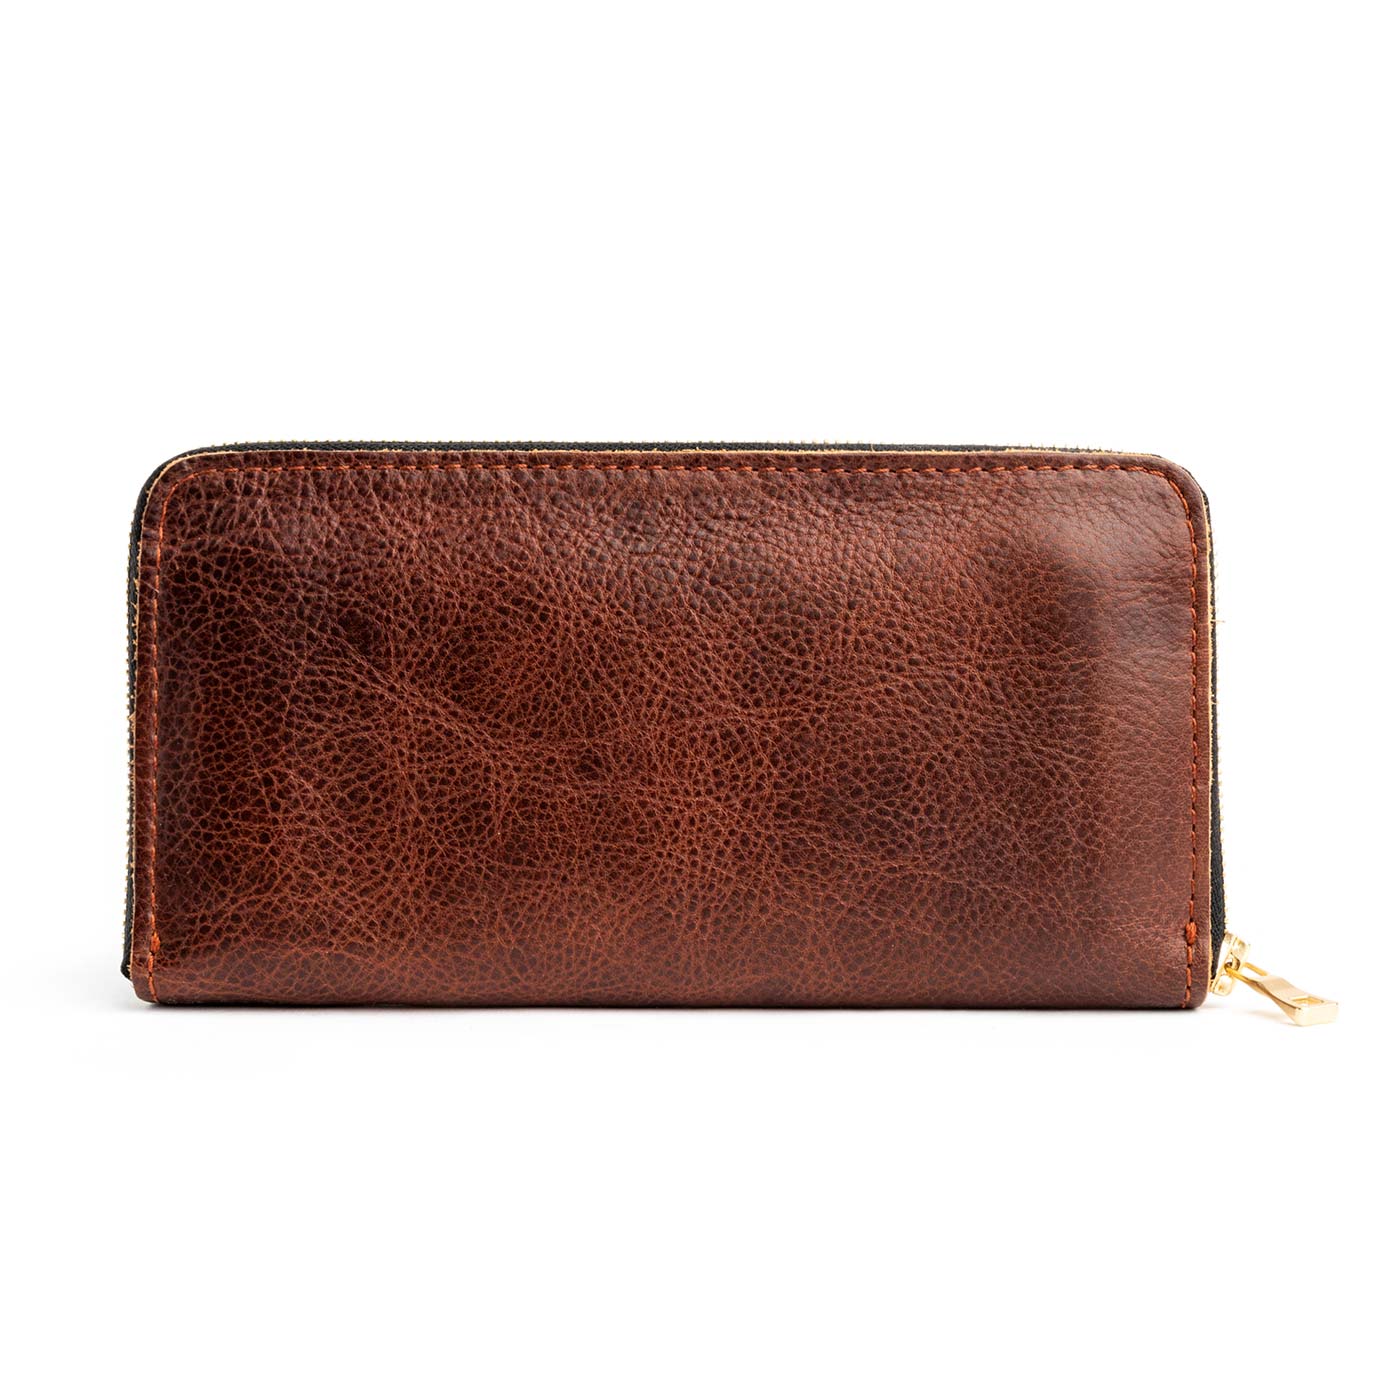 All Color: Nutmeg | handmade leather wallet